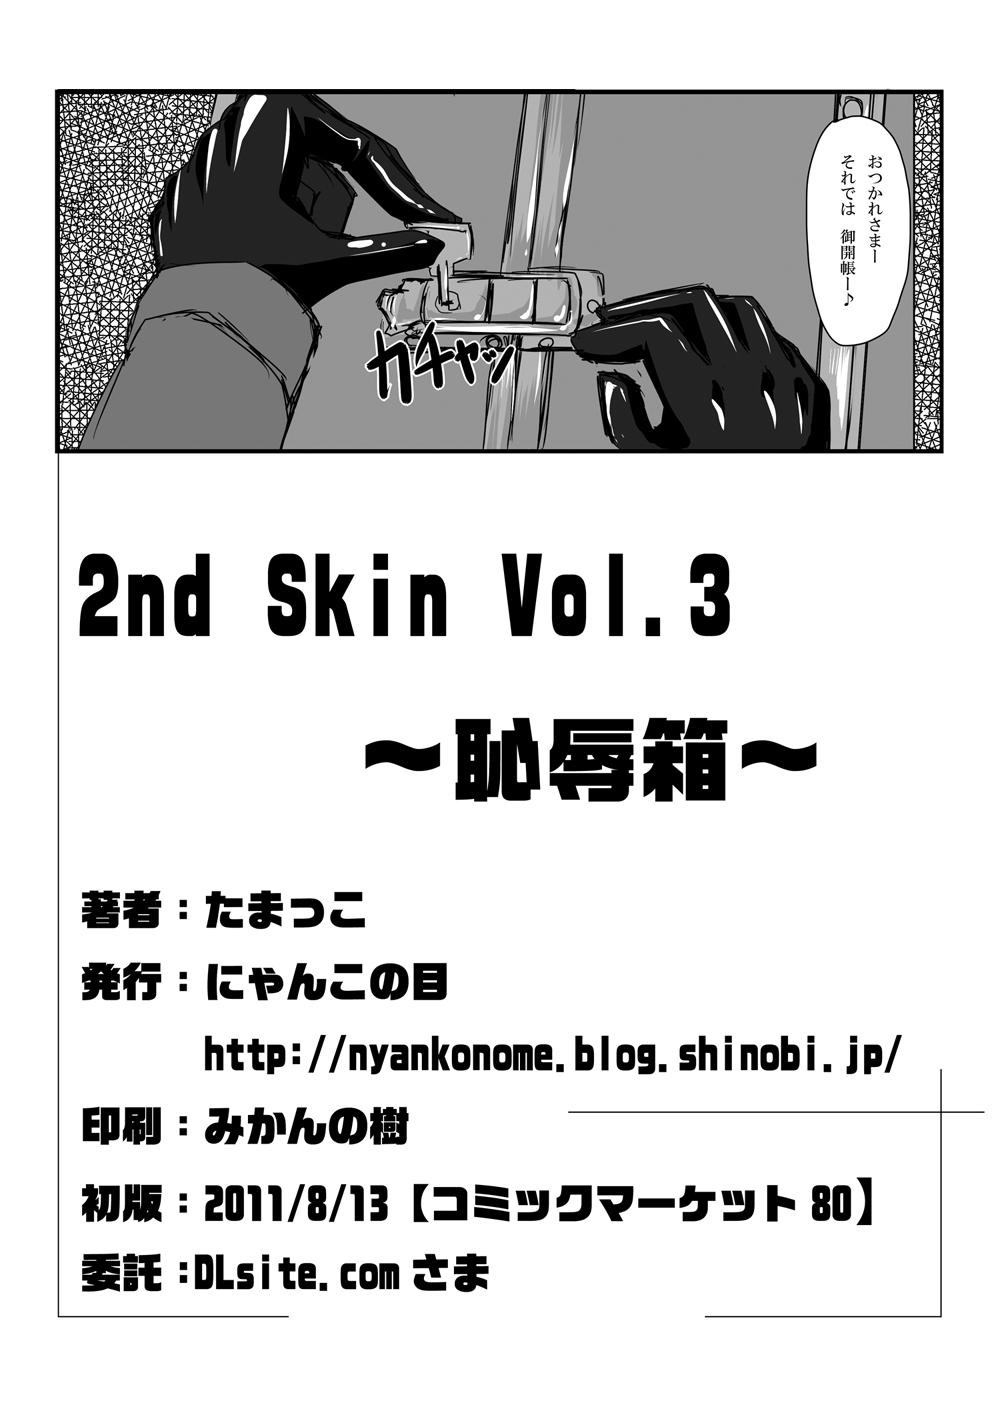 2ndskin vol.3 24